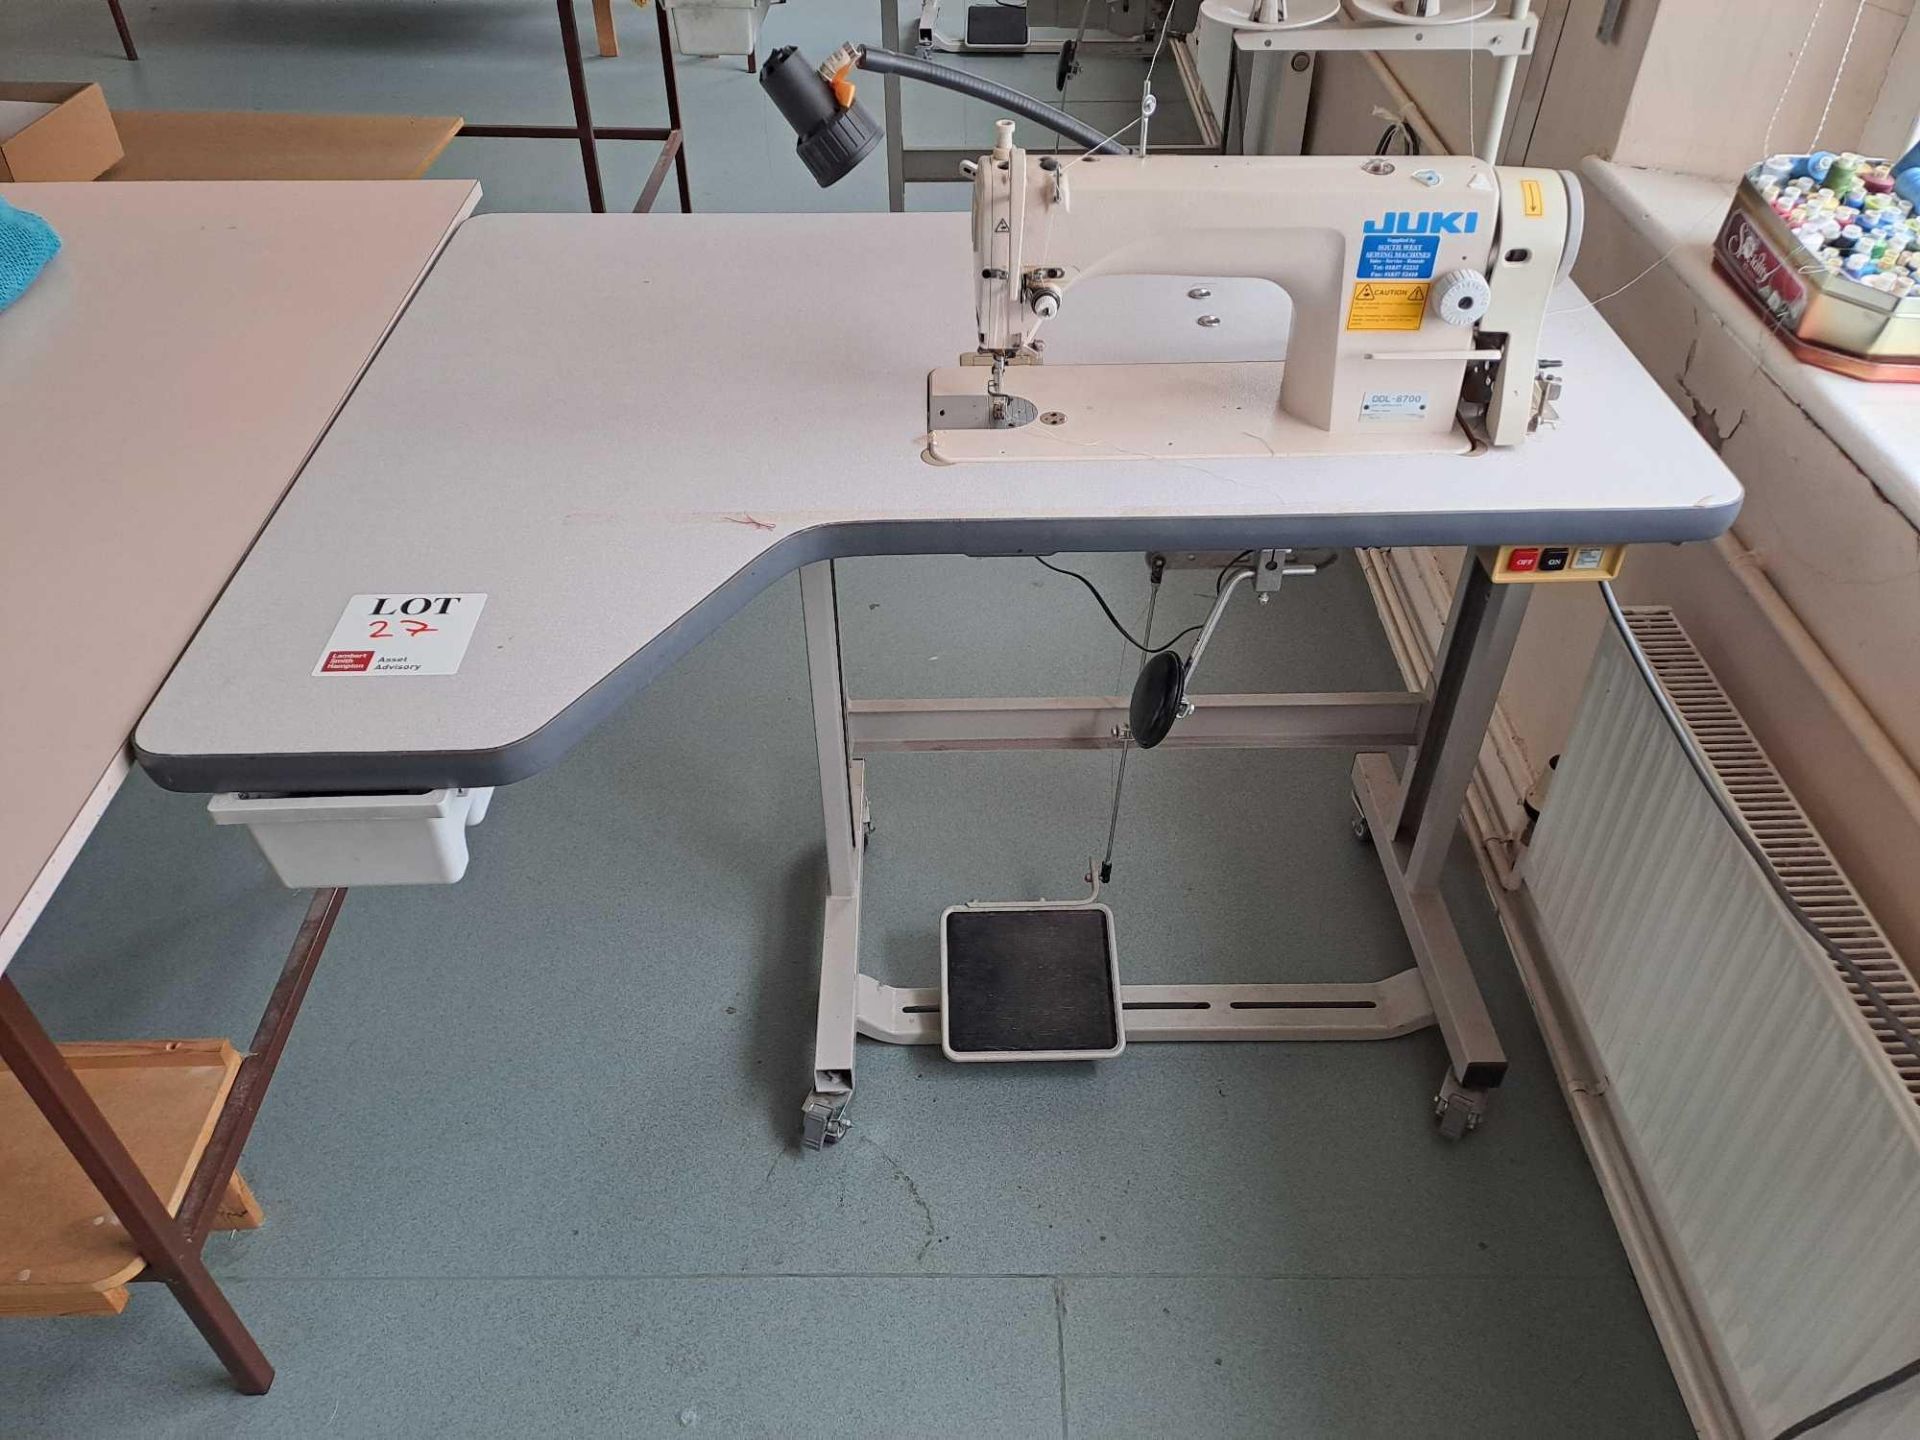 Juki DDL-8700 Sewing Machine